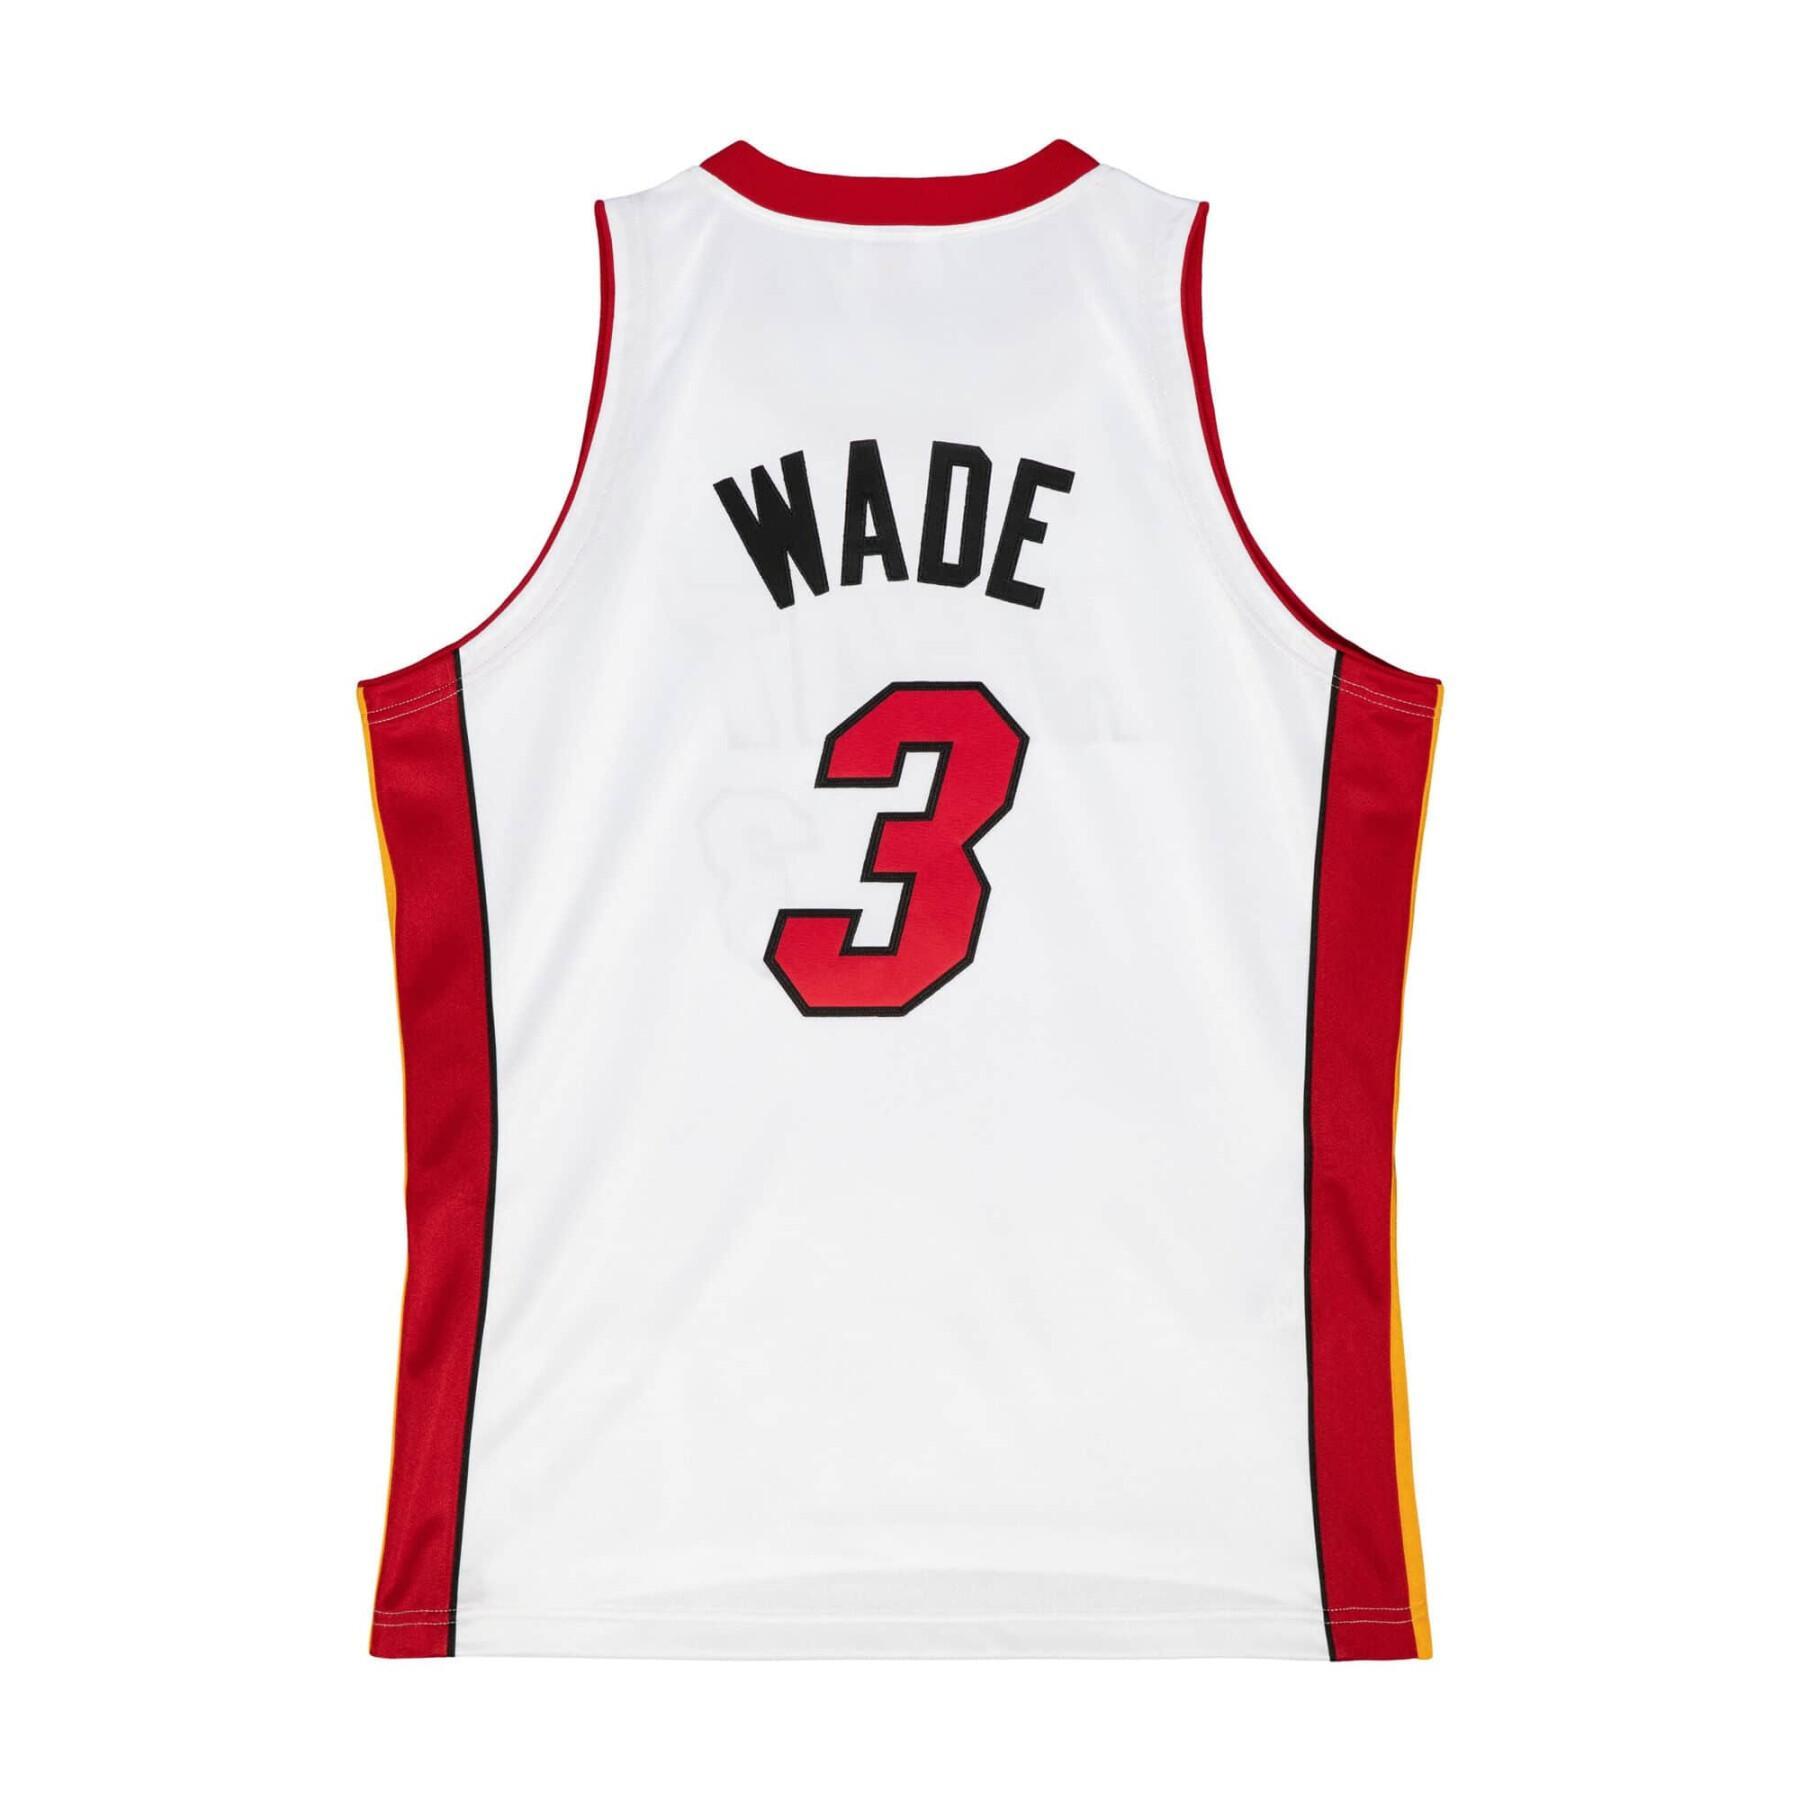 Jersey Miami Heat NBA Finals 2005 Dwyane Wade